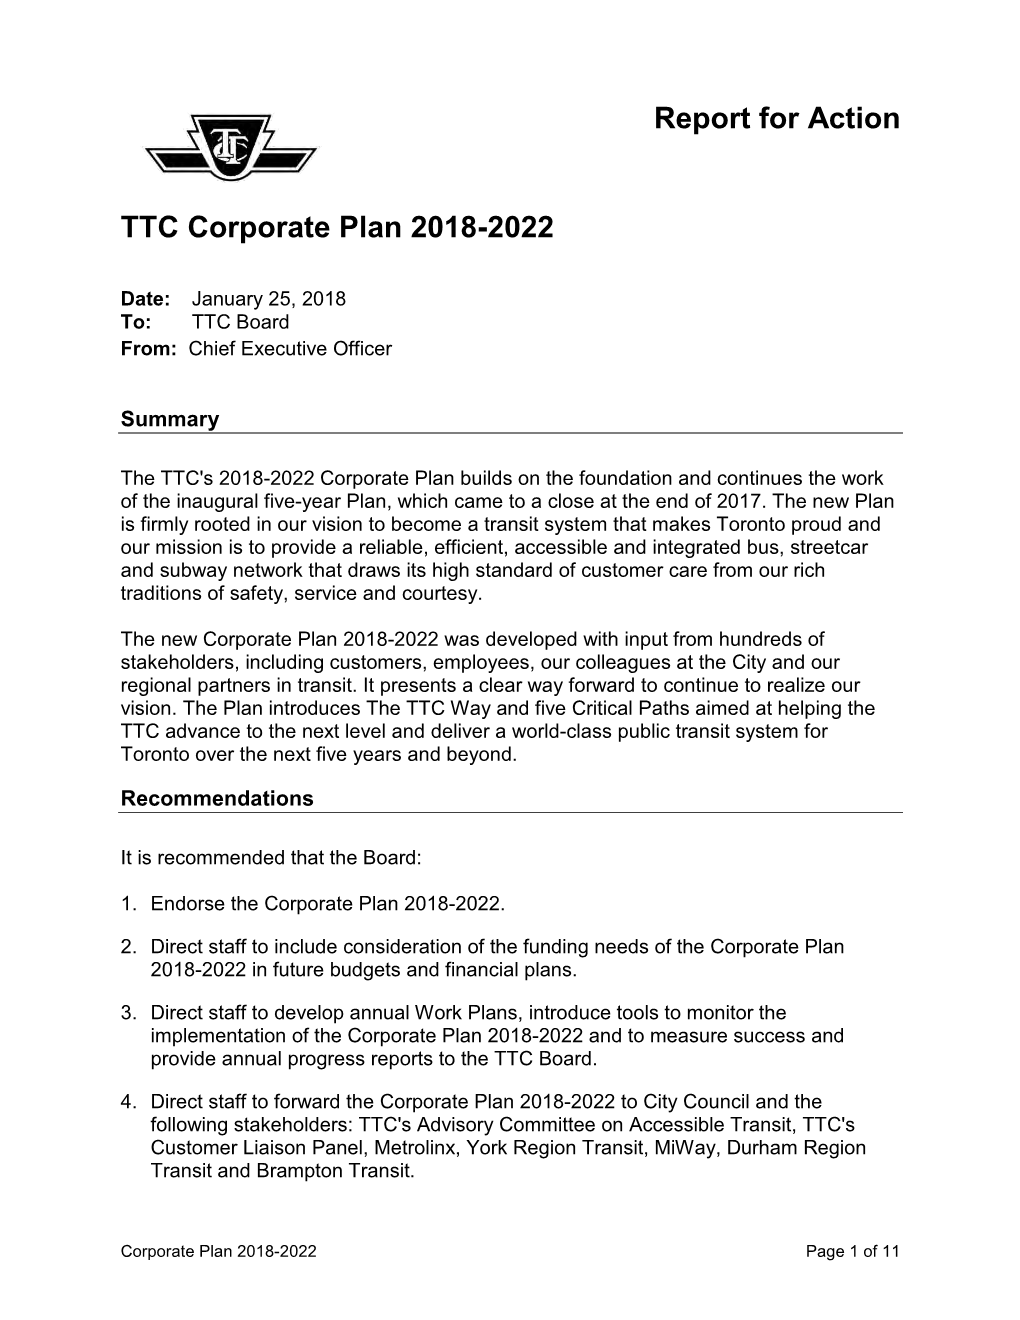 Corporate Plan 2018-2022